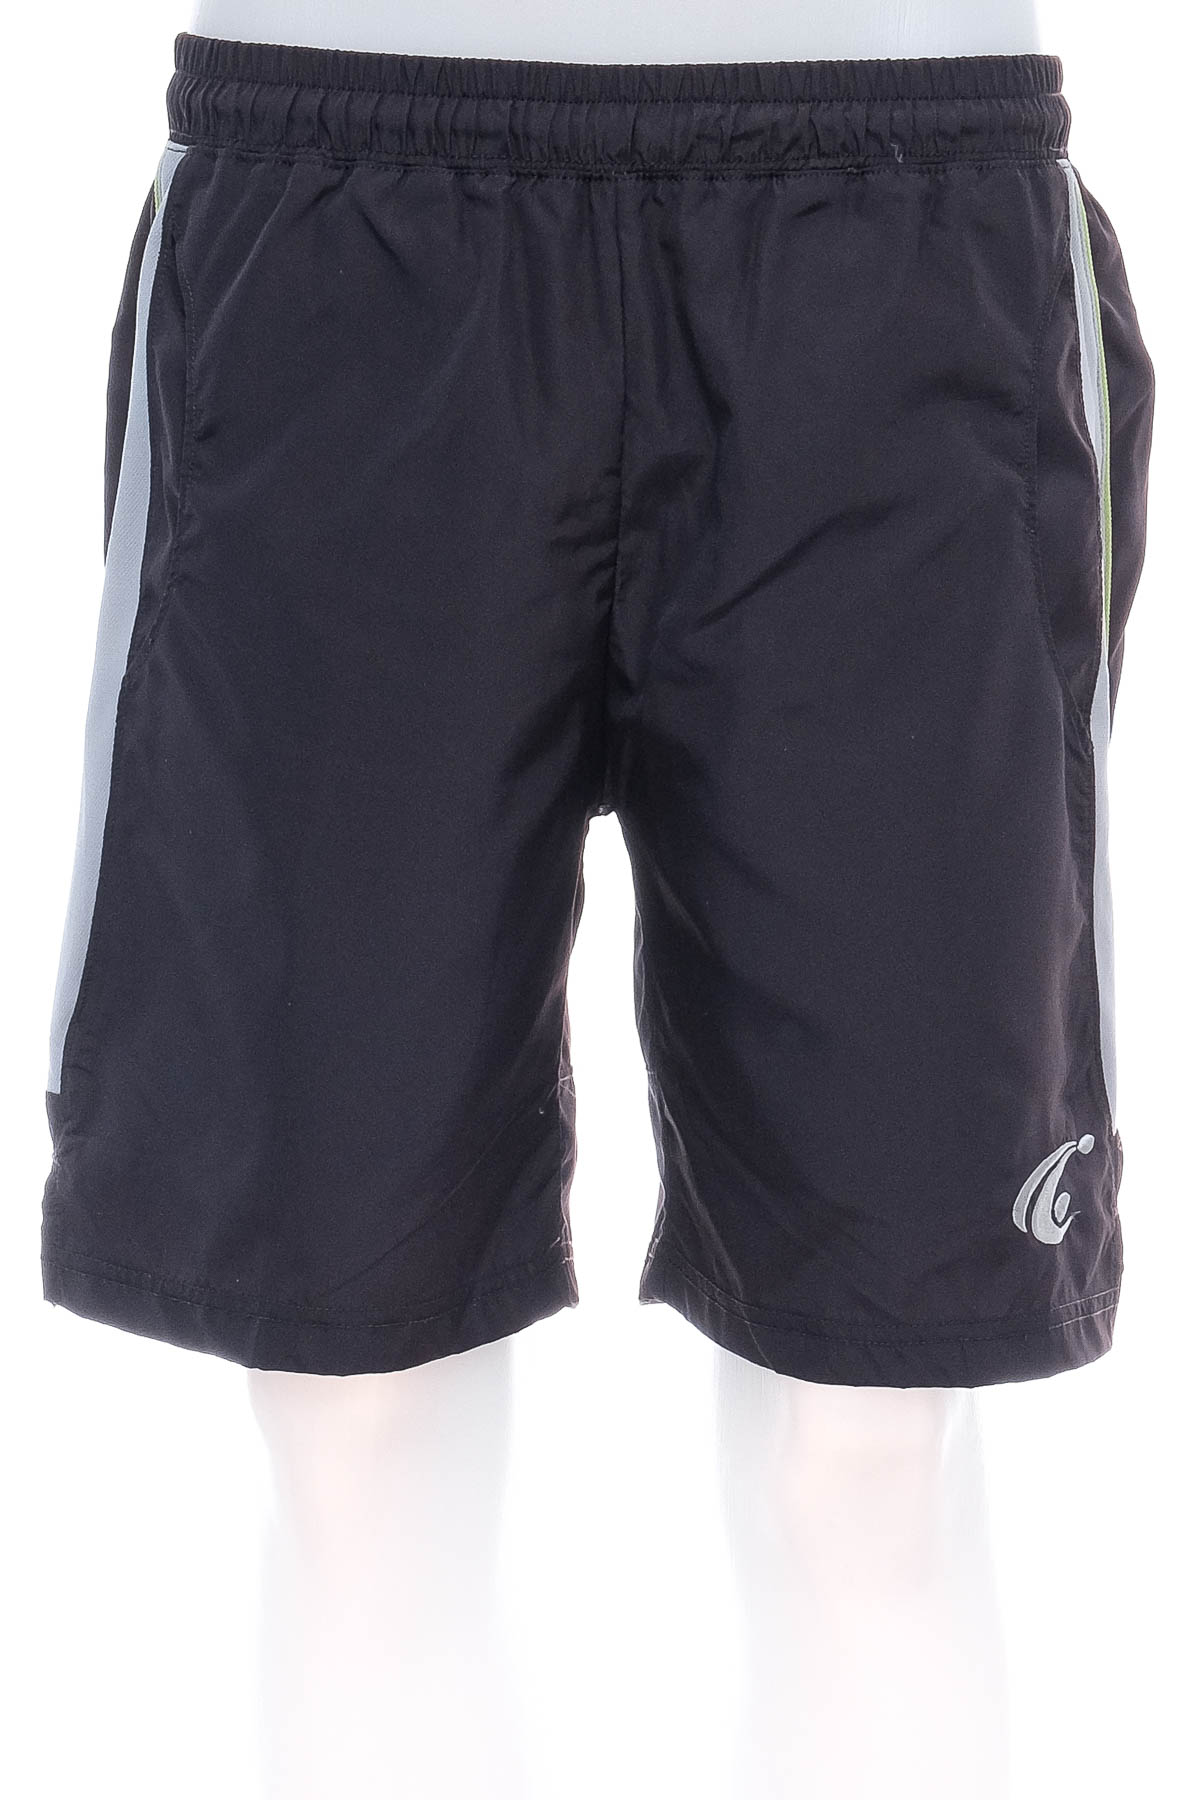 Men's shorts - CORNILLEAU - 0